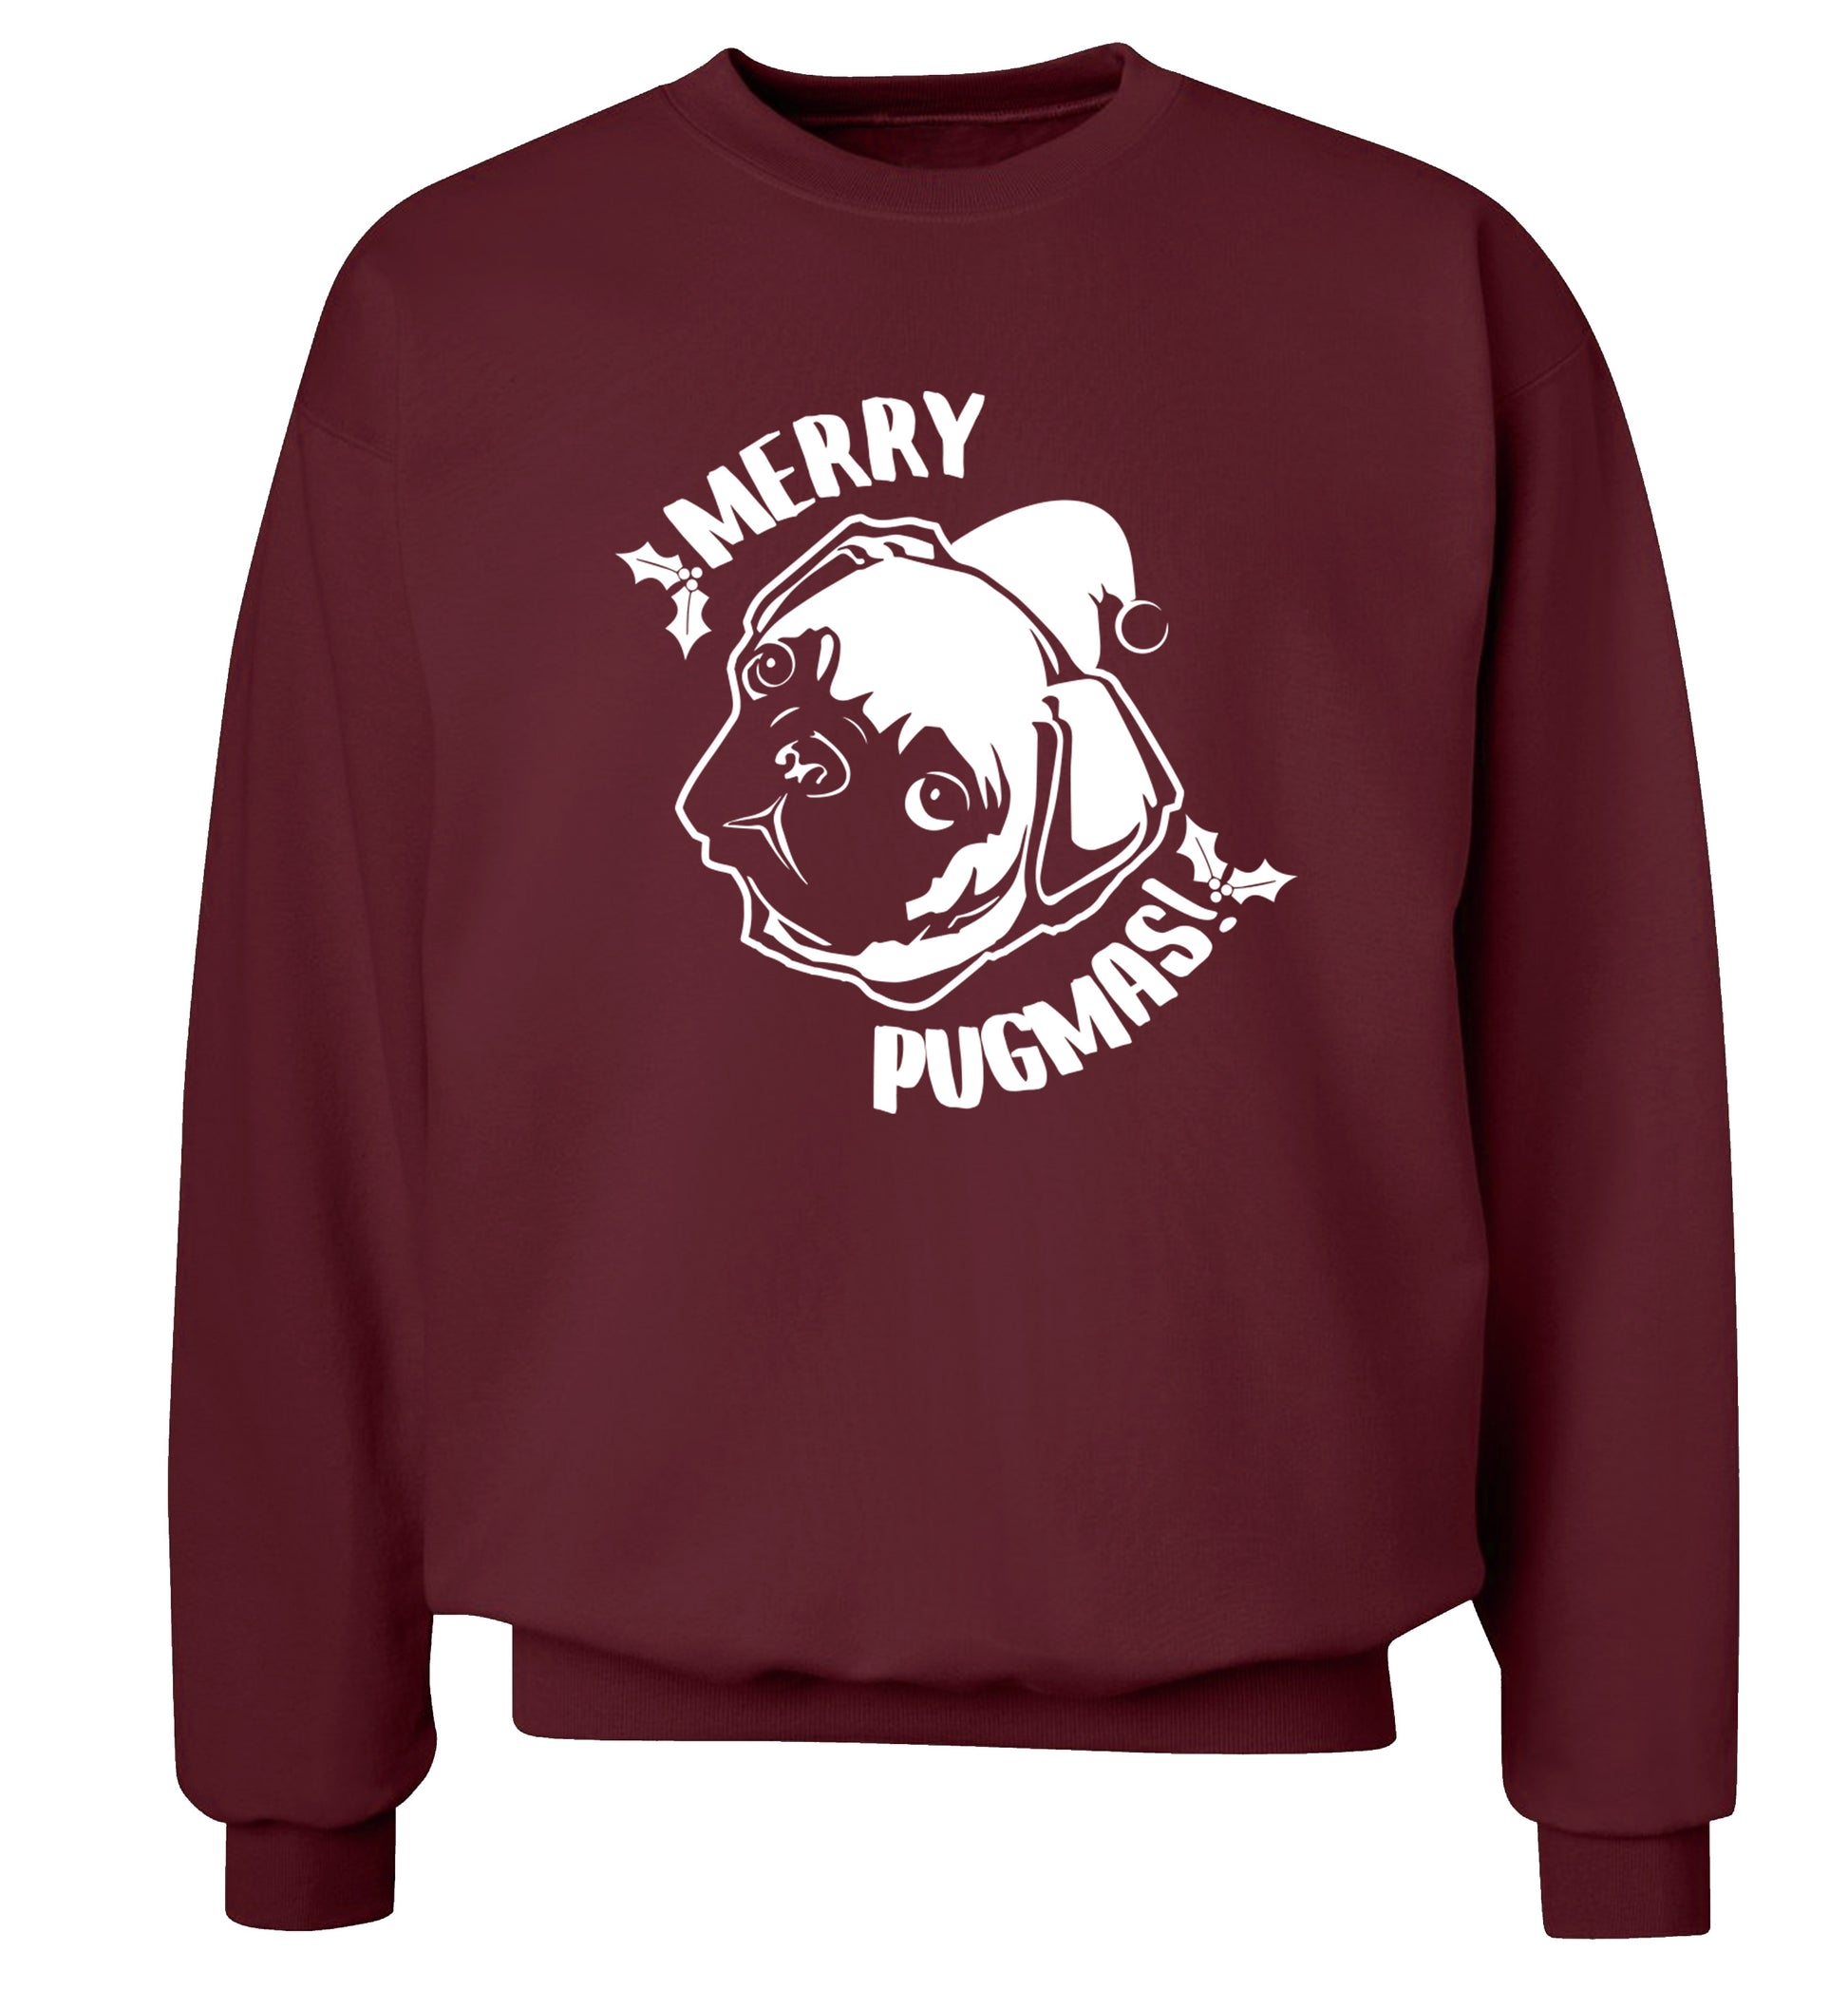 Merry Pugmas Adult's unisex maroon Sweater 2XL